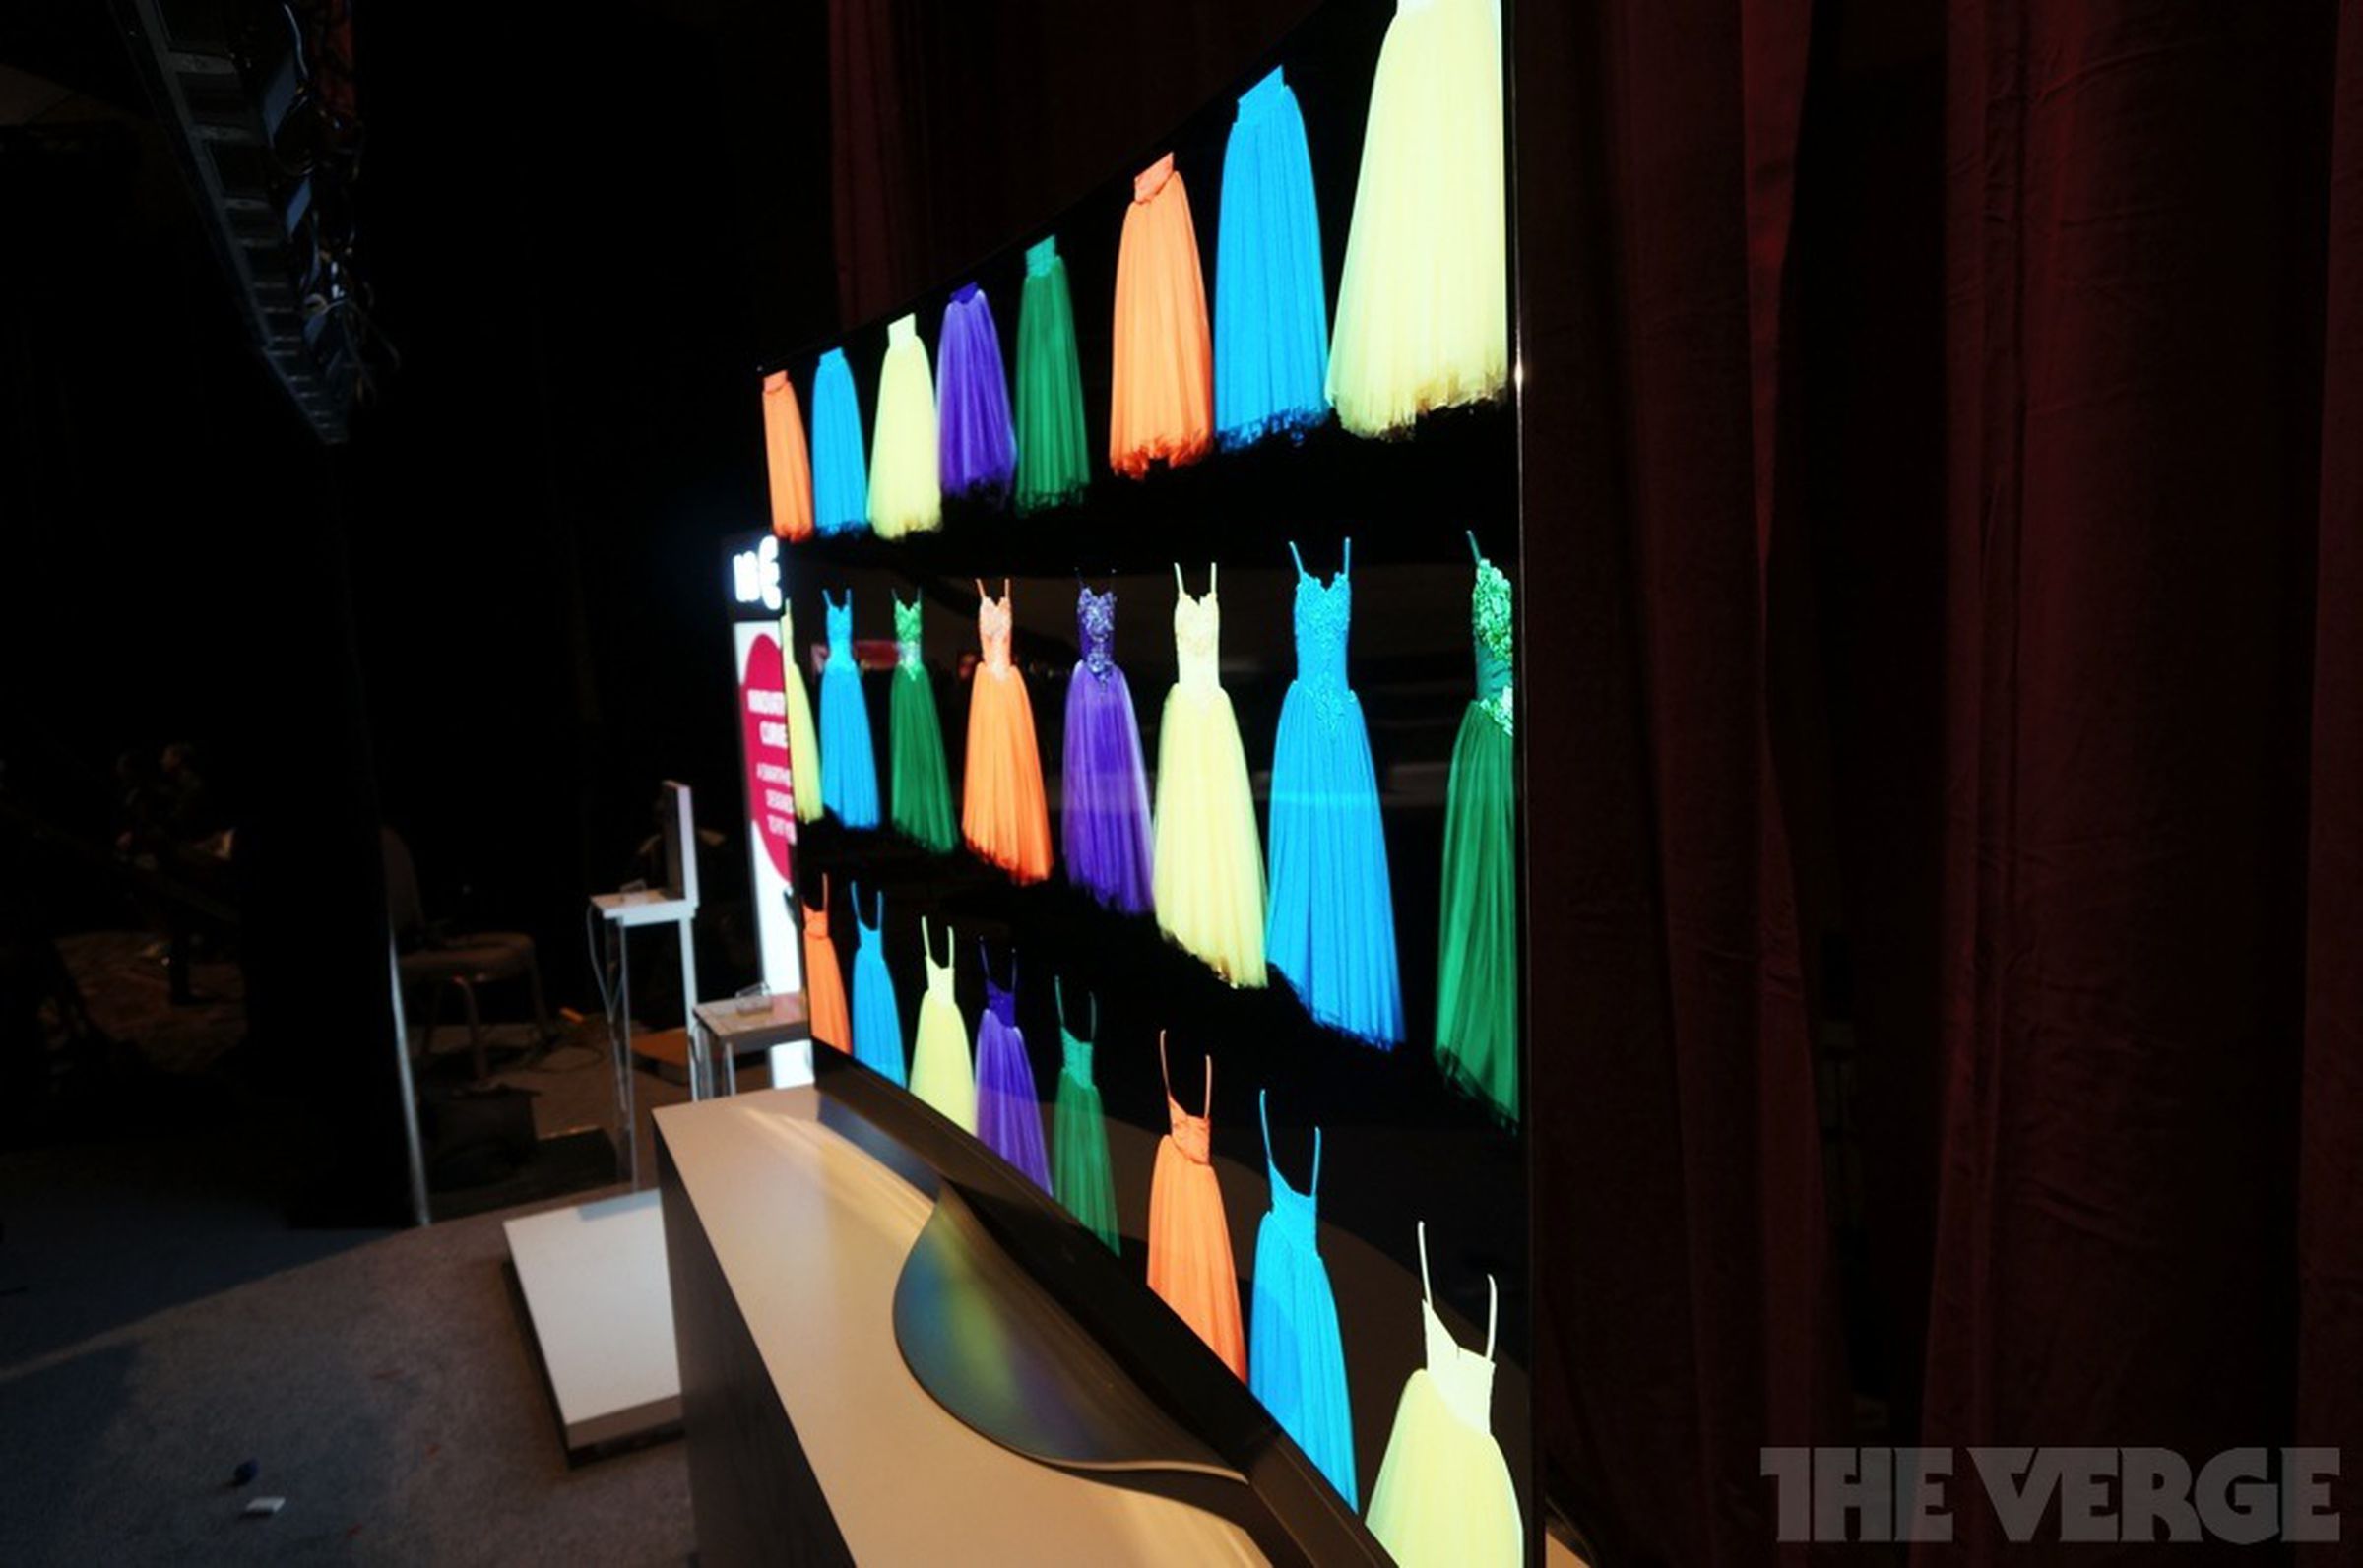 LG's curved OLED TV